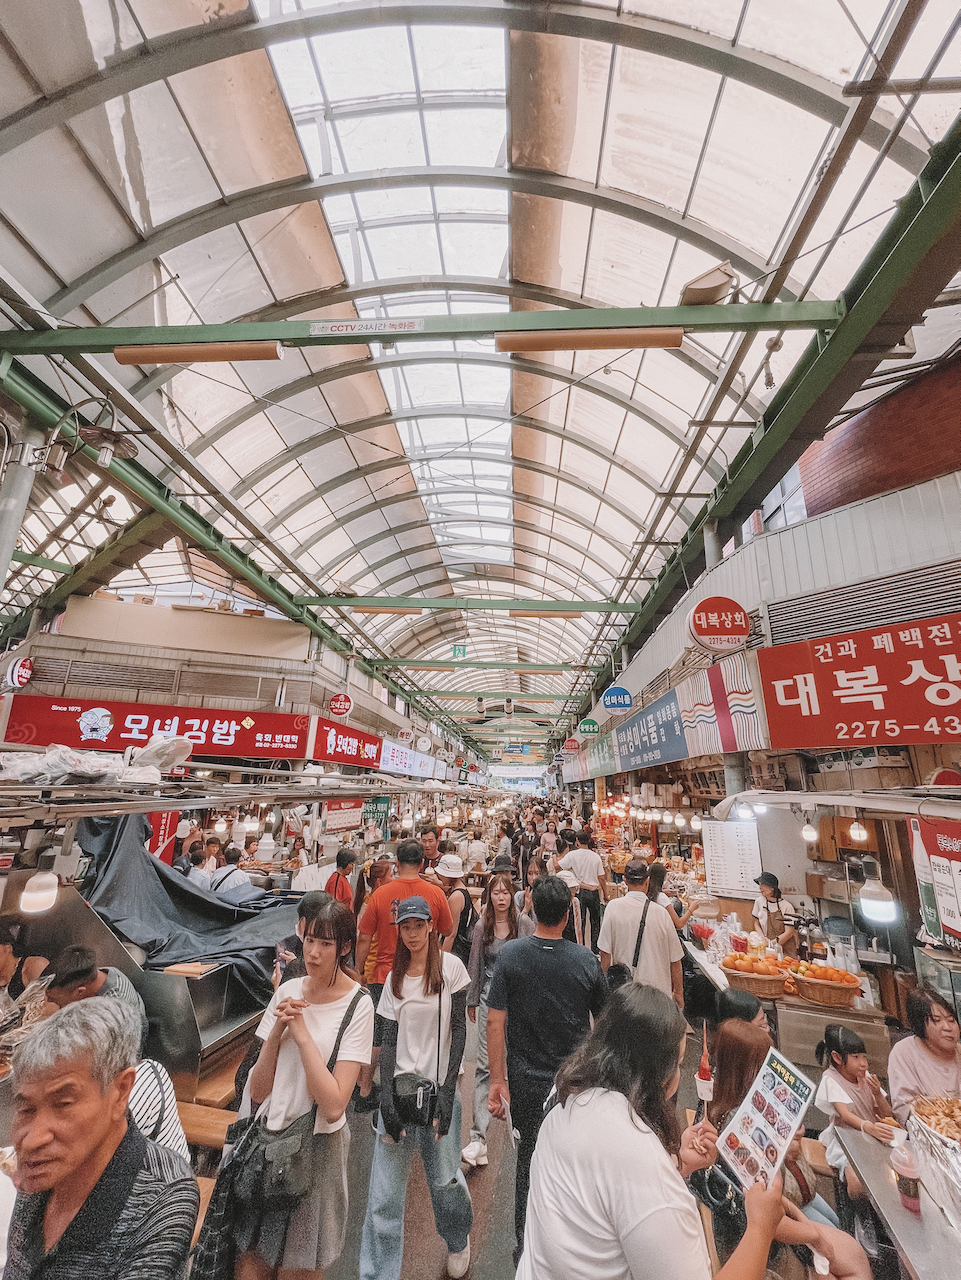 The crowd at Gwangjang Market - Seoul - South Korea